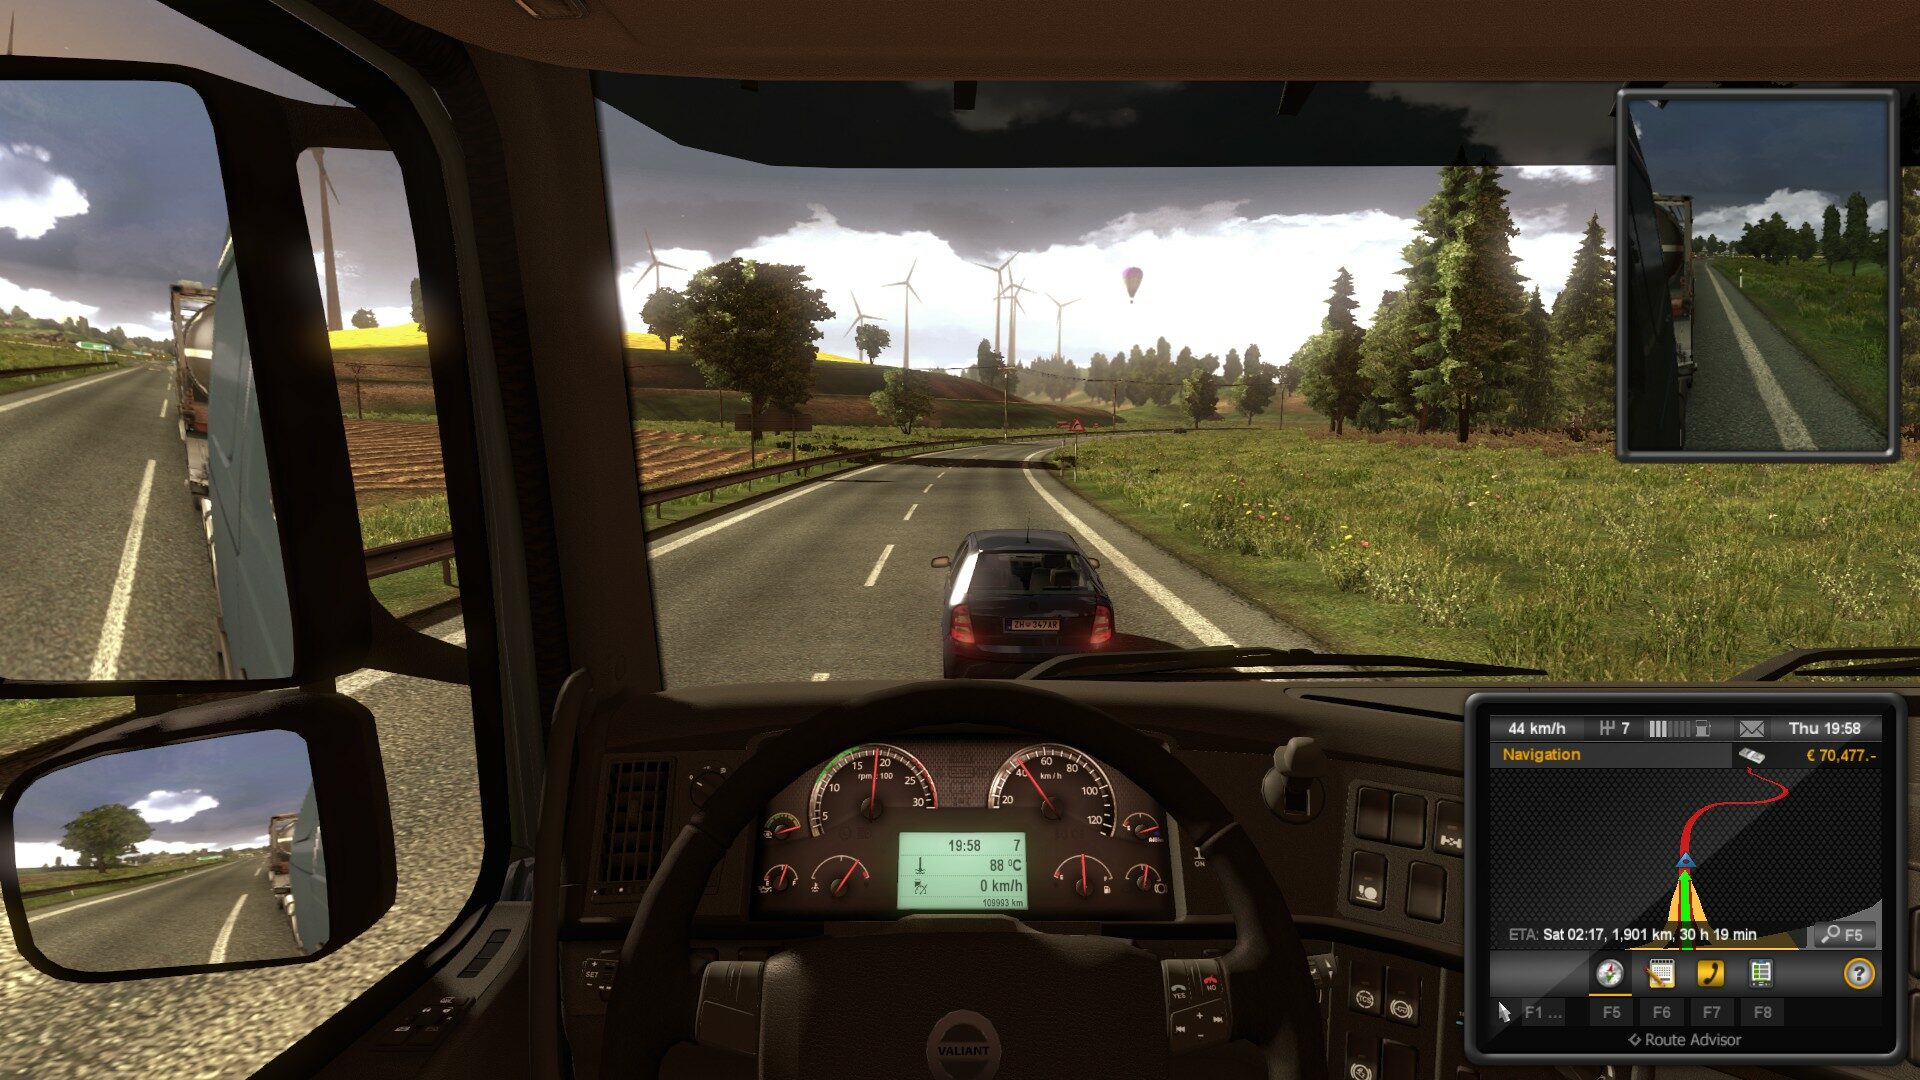 euro truck simulator 2 gold edition